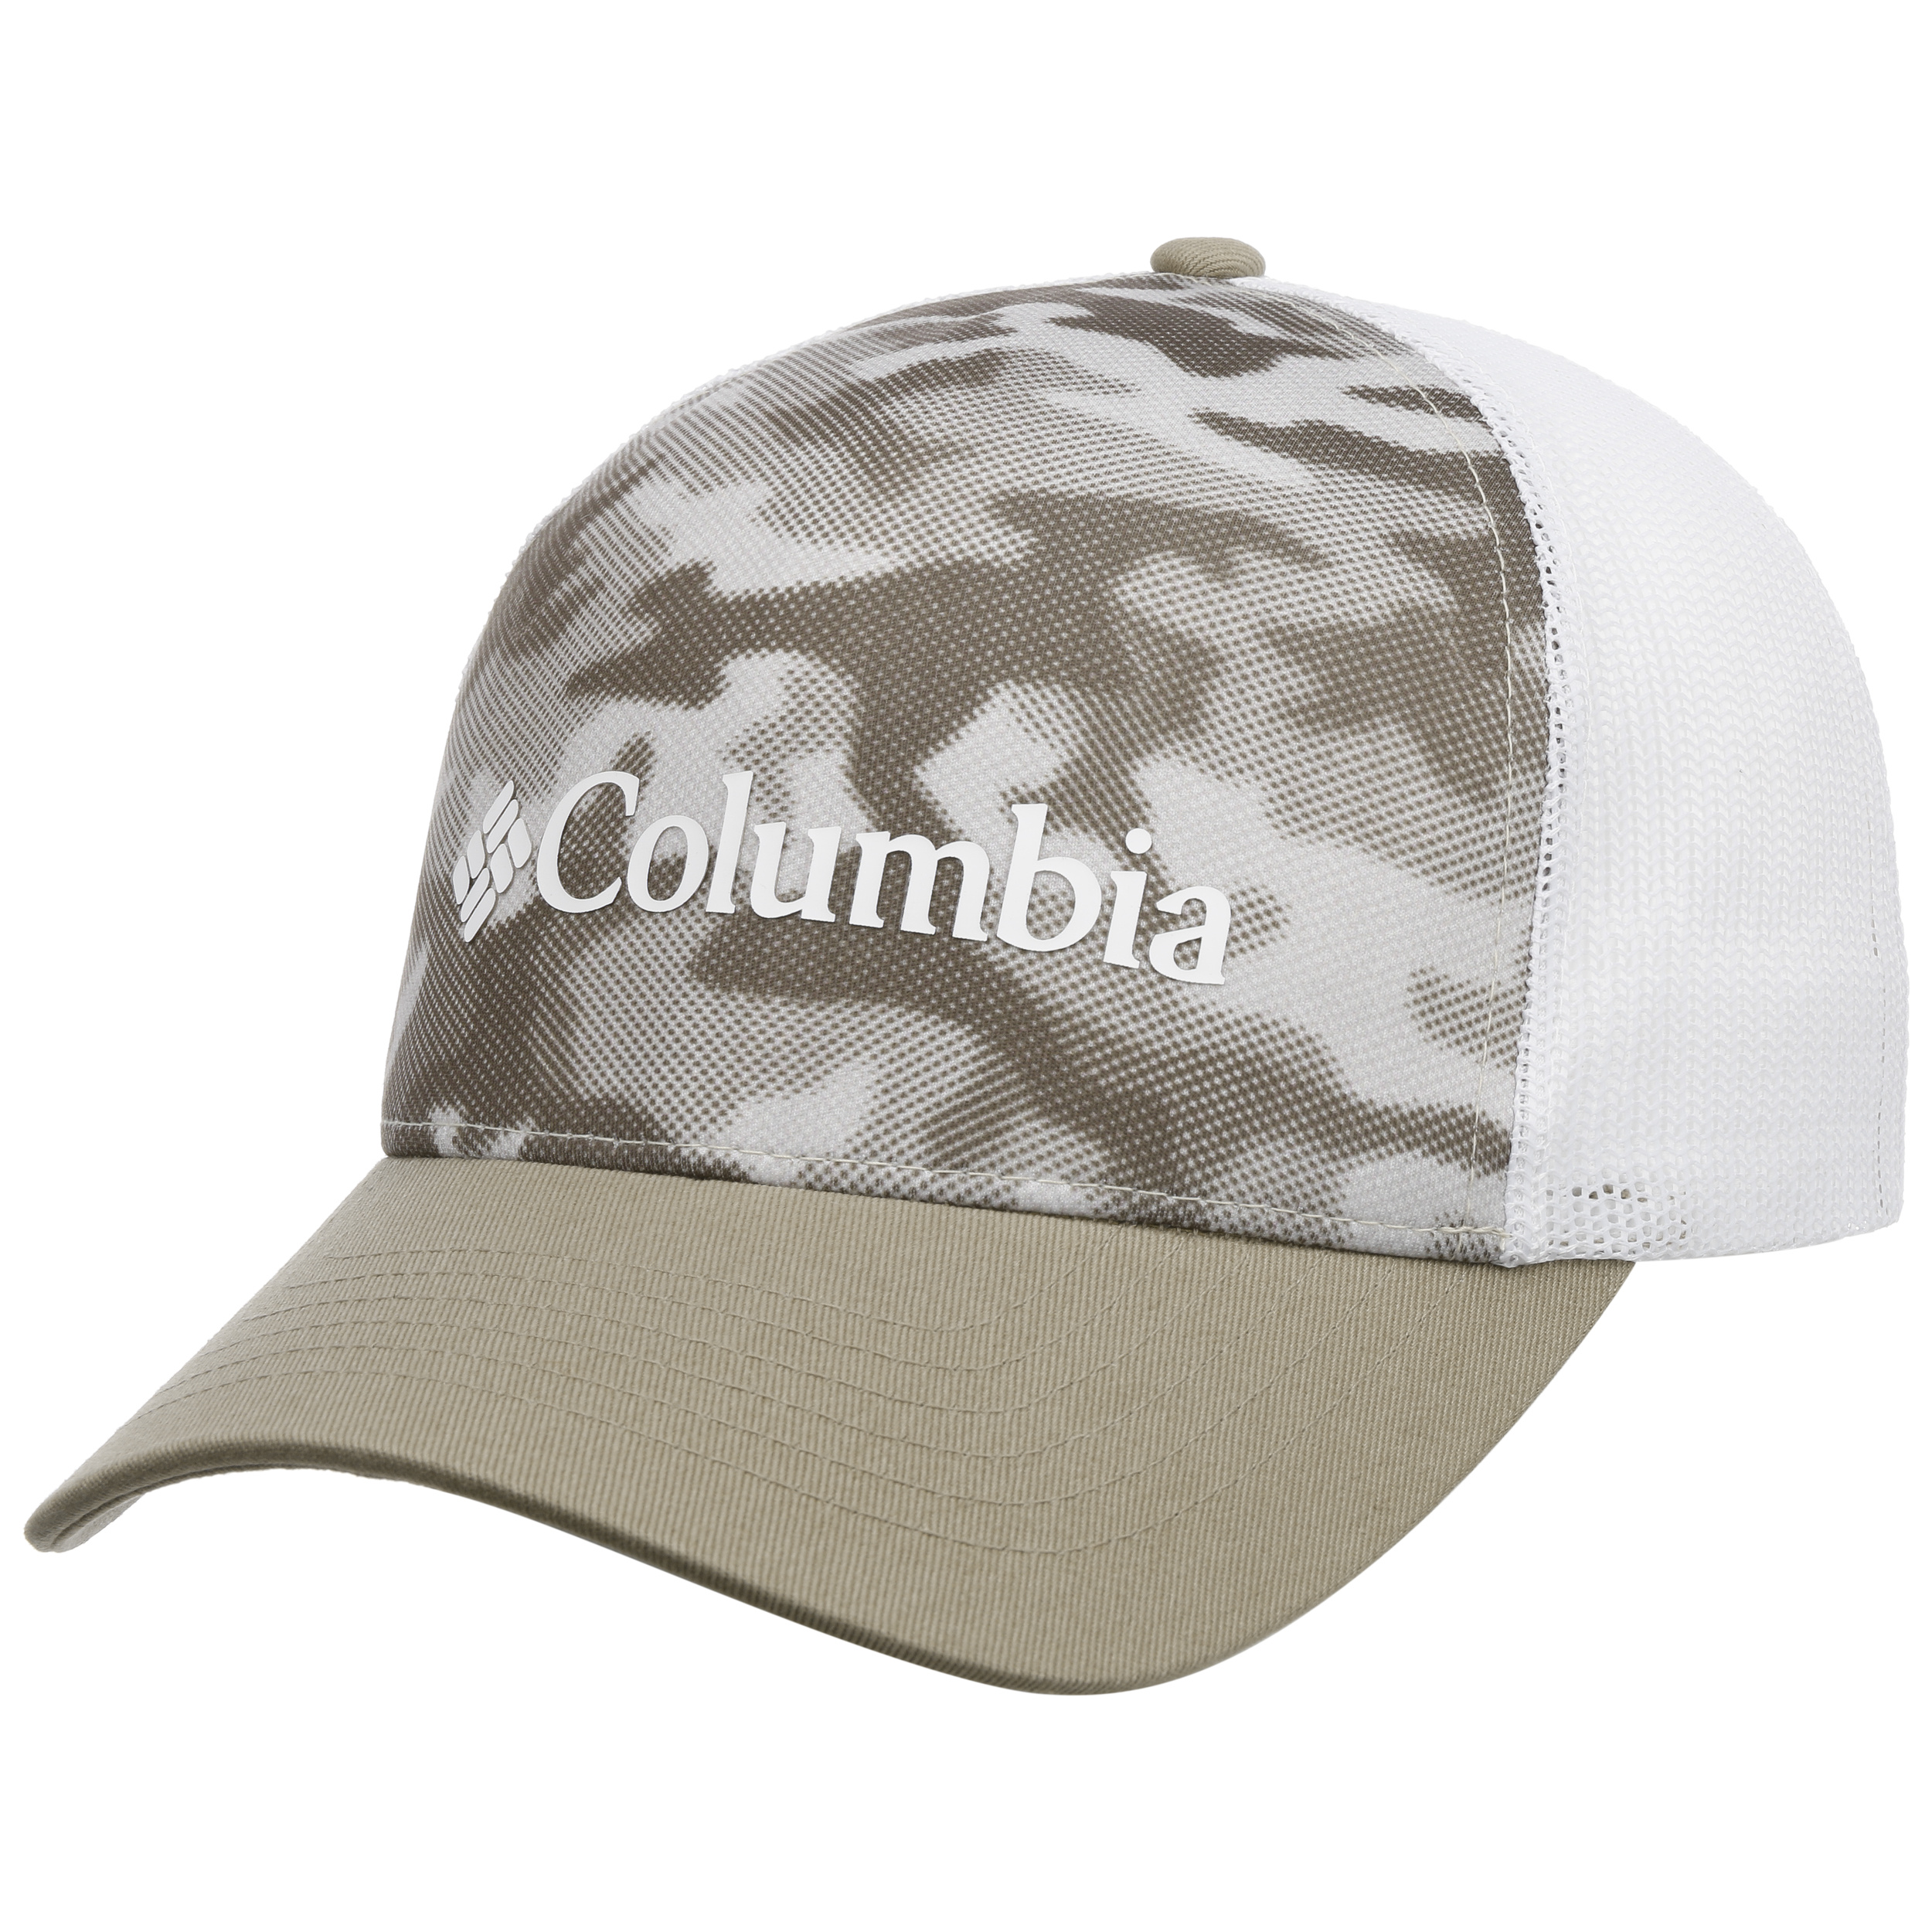 COLUMBIA-PUNCHBOWL™ TRUCKER FLORICULTURE PRINT/SUMMER PEACH/CHALK - Cap